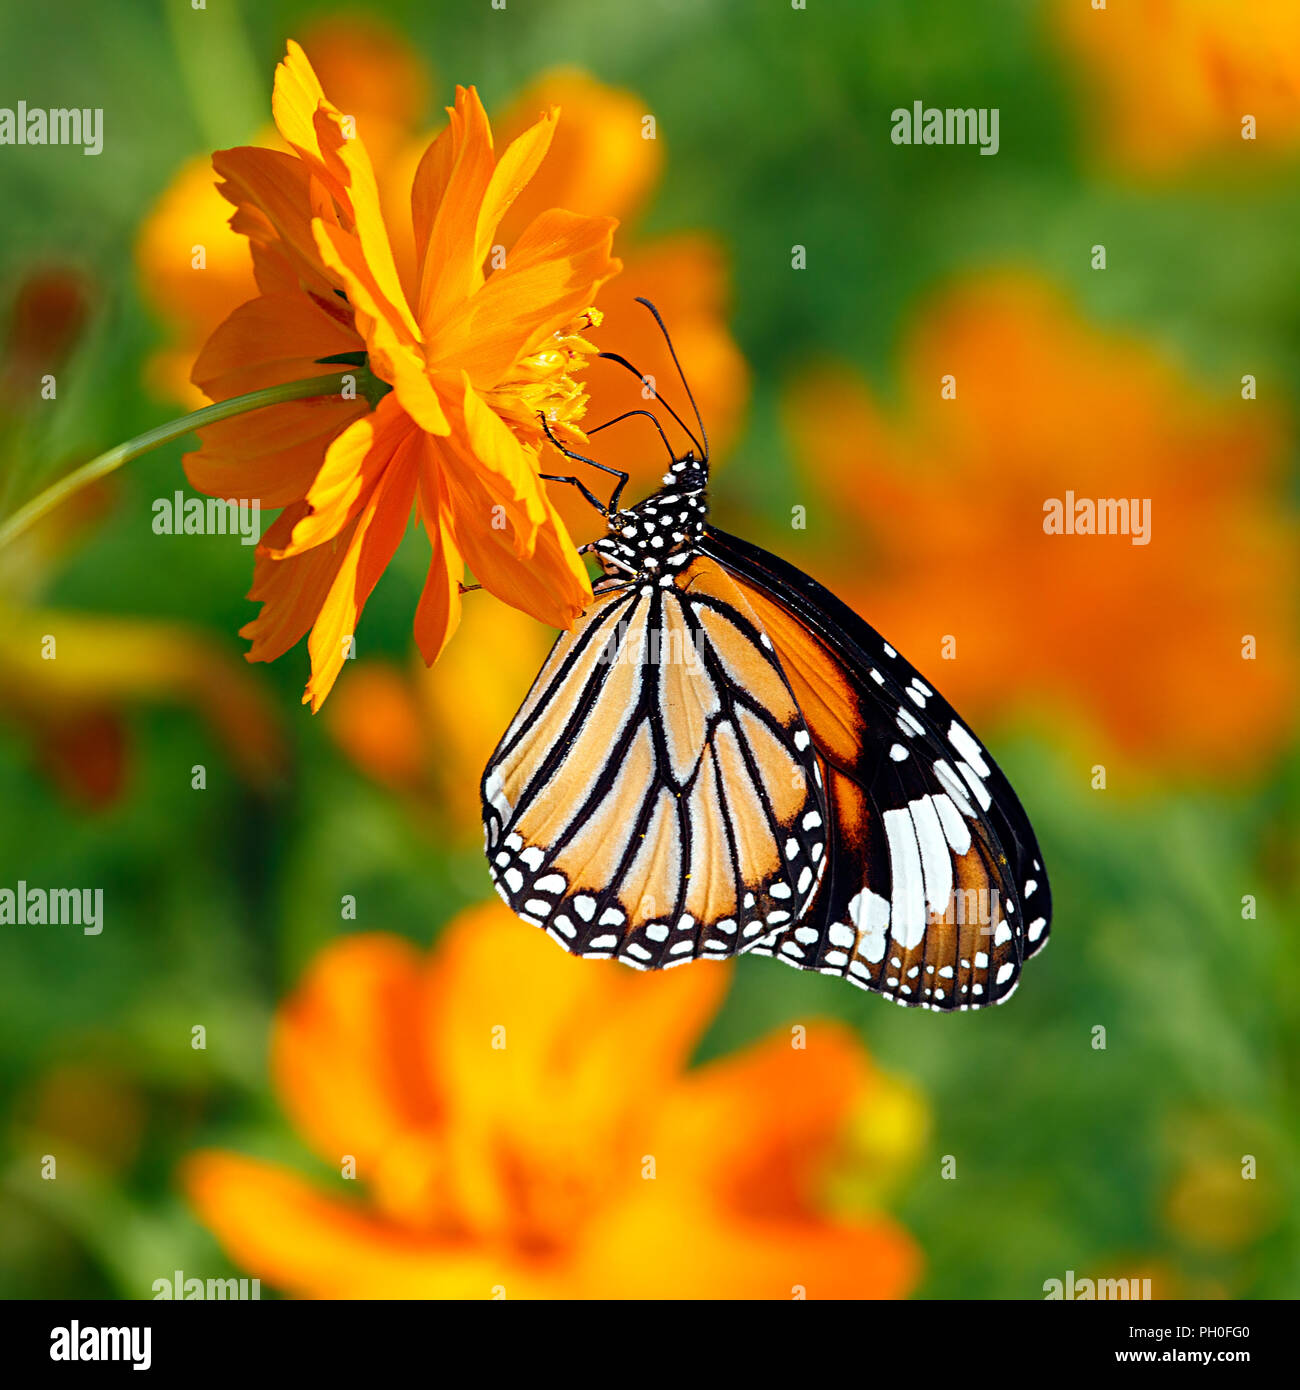 Danaus genutia u oriental tigre de rayas naranja naranja doble mariposa sobre una flor de cosmos entre flores de naranja. Foto de stock